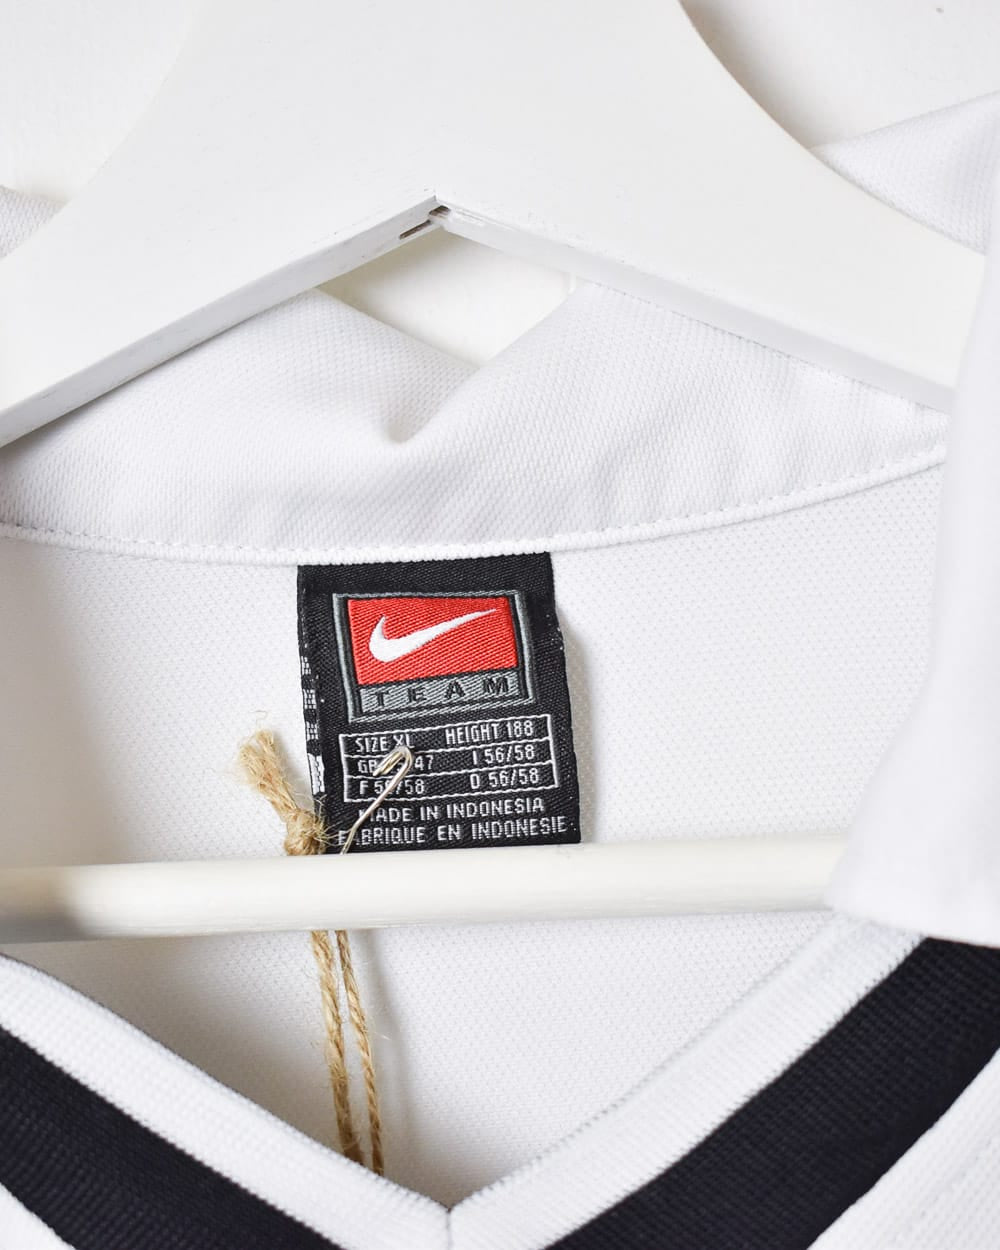 White Nike Collared Long Sleeved T-Shirt - X-Large